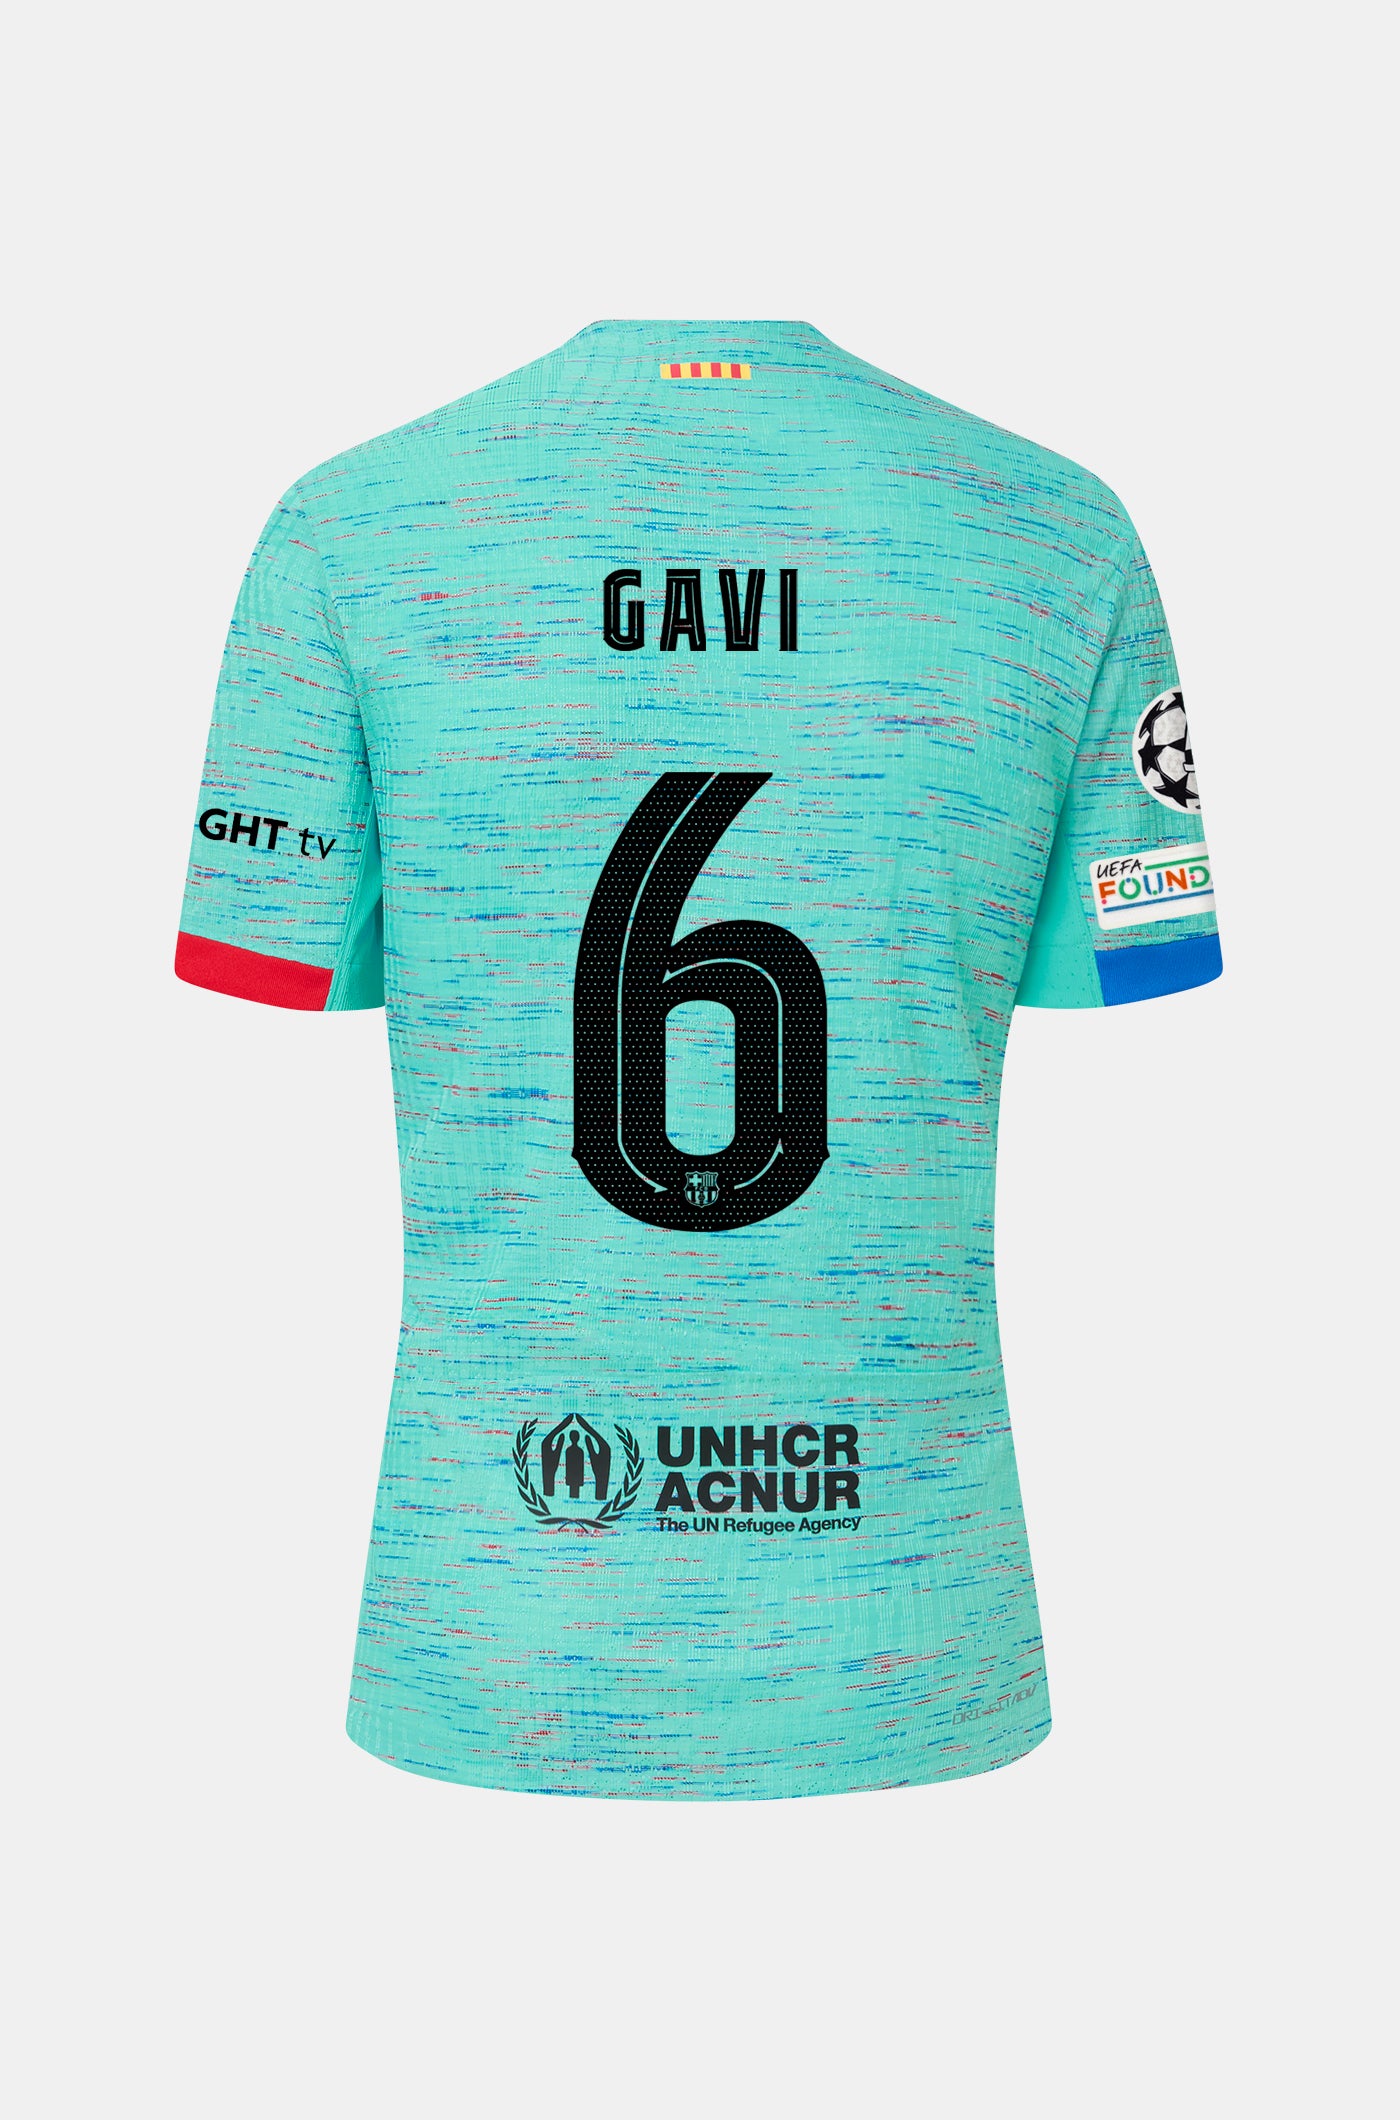 UCL FC Barcelona third shirt 23/24 Player’s Edition - GAVI